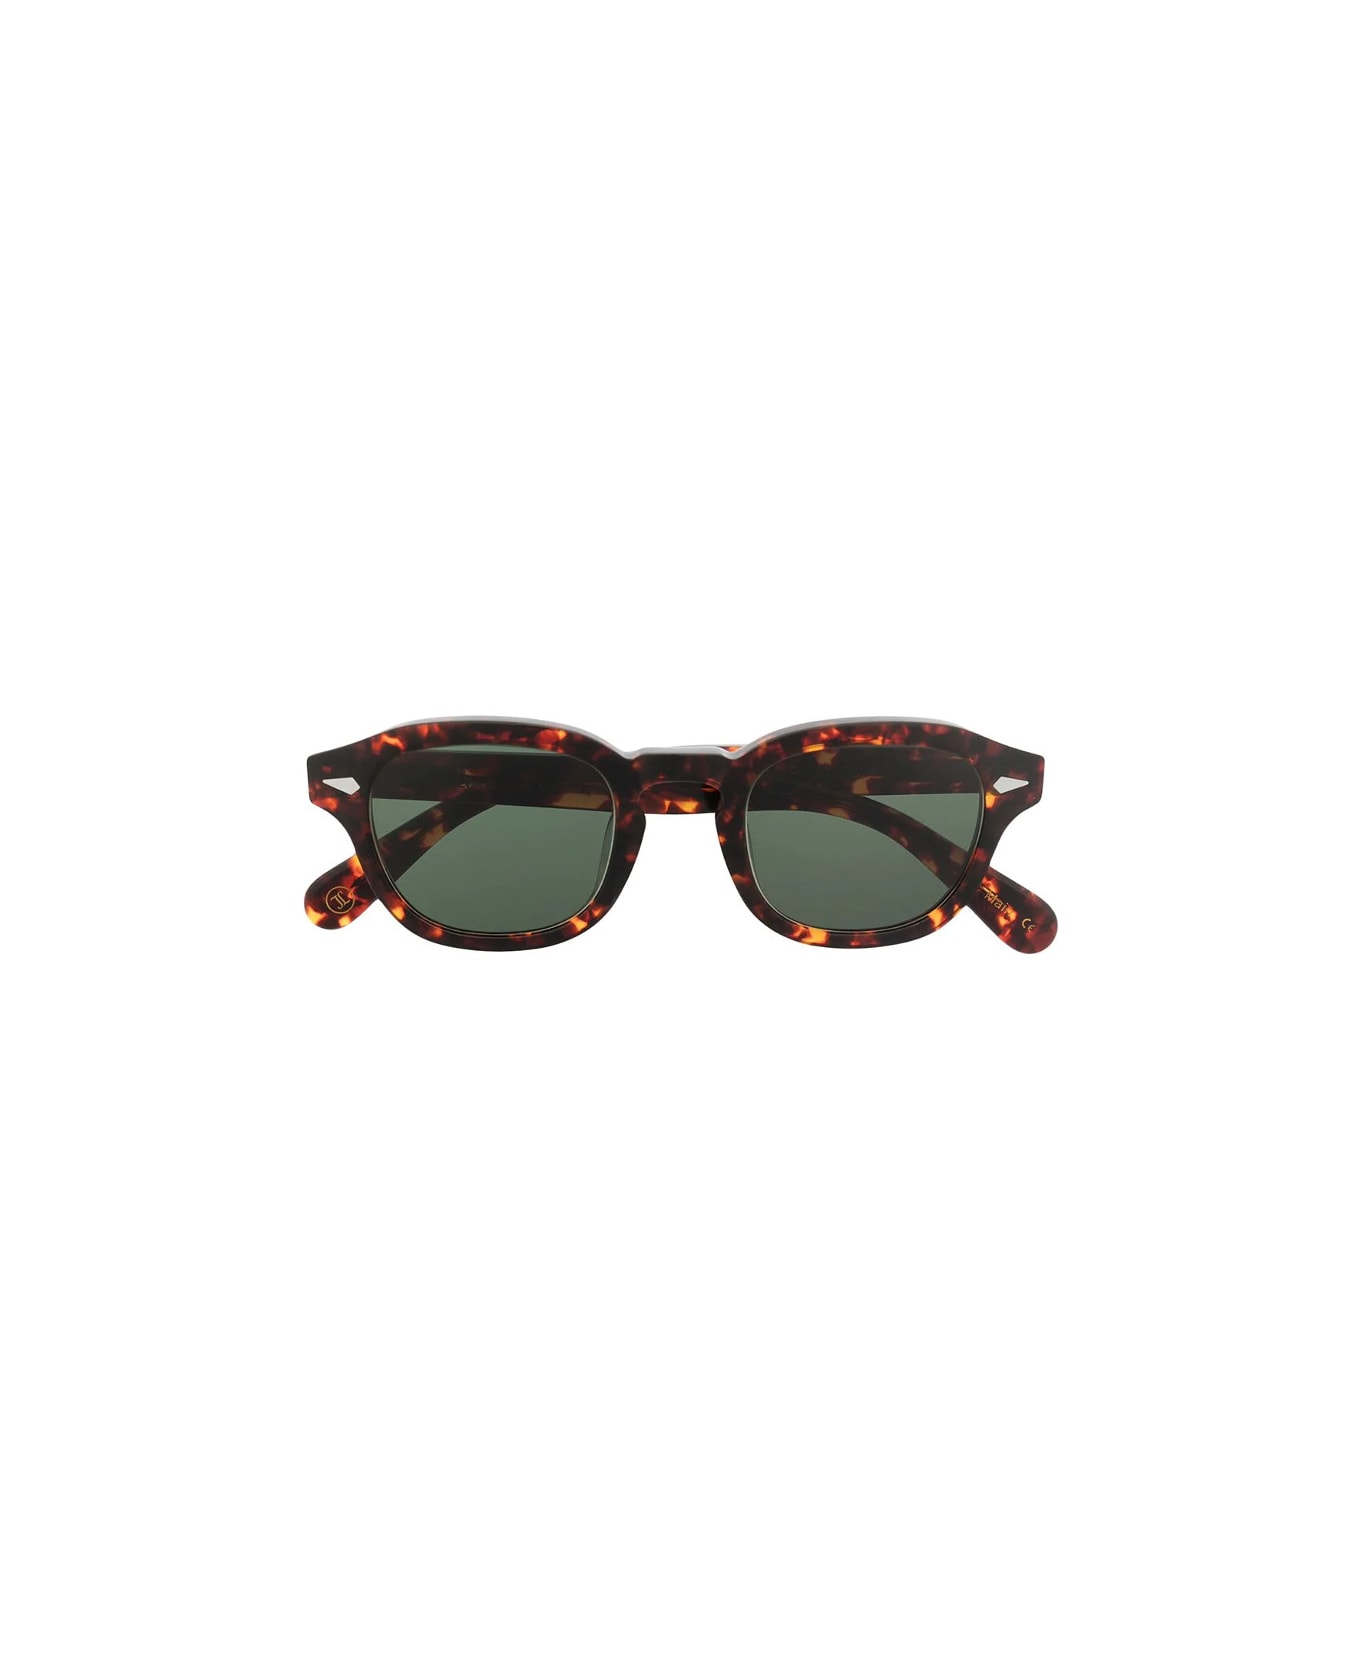 Lesca Posh-s 424 Sunglasses - Tartarugato サングラス